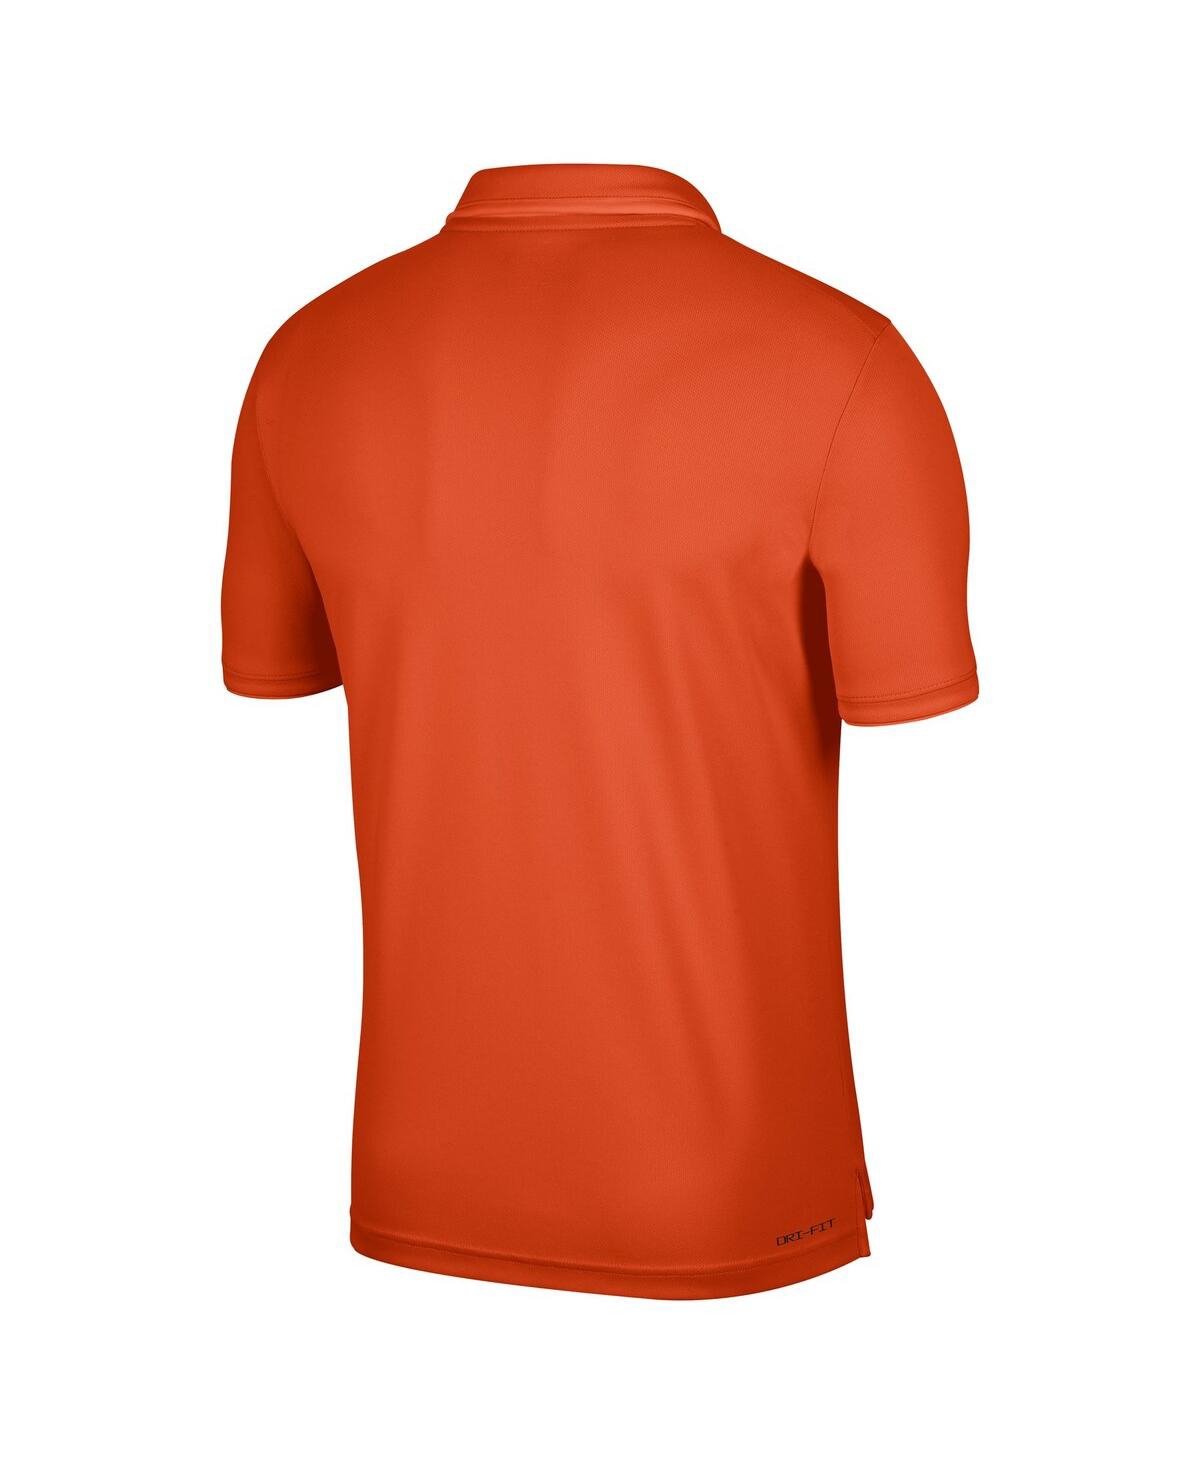 Shop Nike Men's  Orange Clemson Tigers Uv Performance Polo Shirt